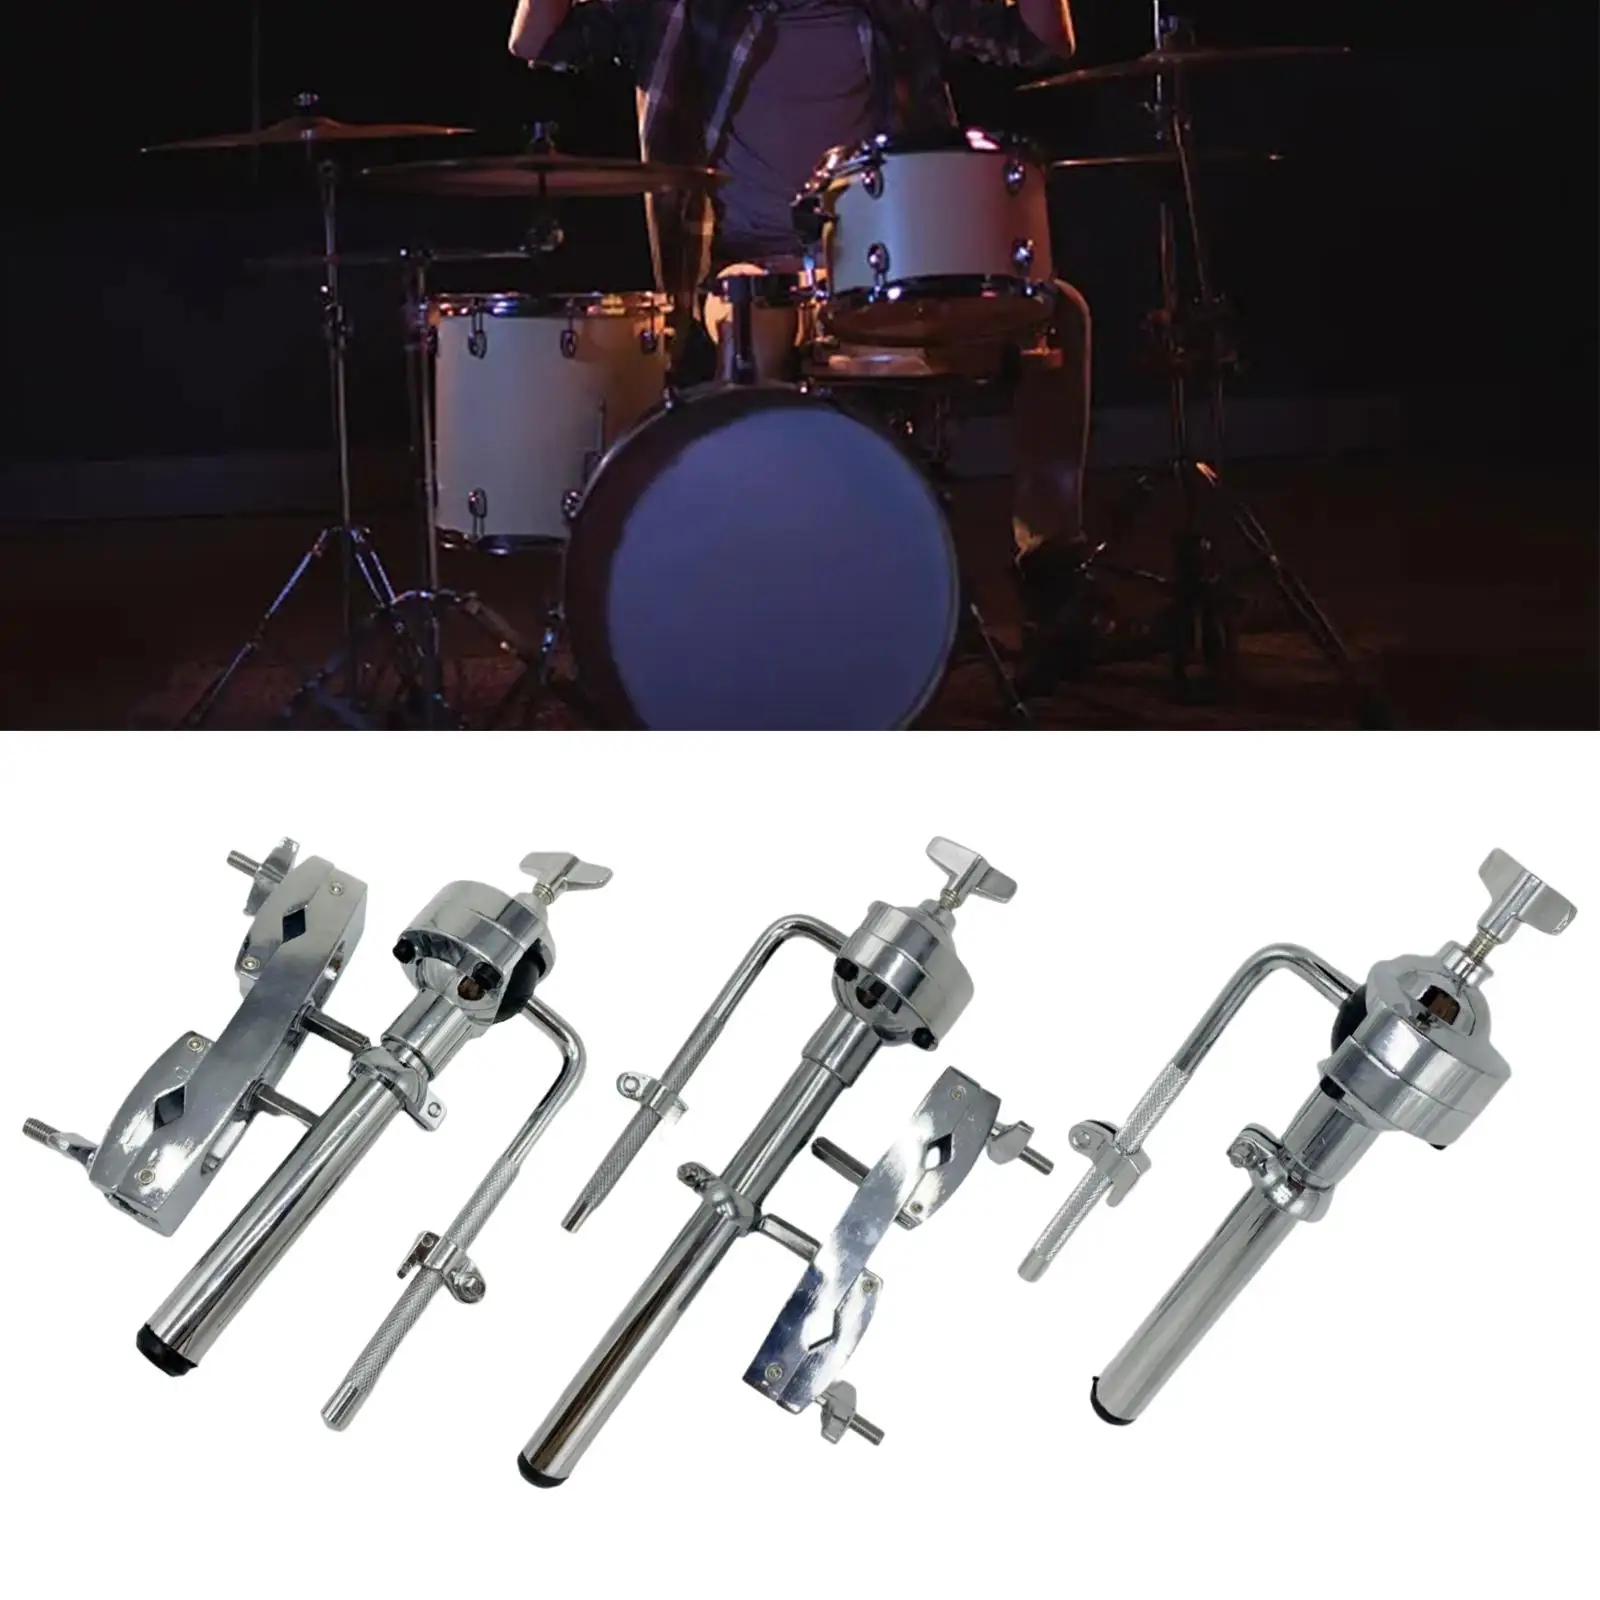 Metal Tom Drum Holder Bracket Drum Hardware Percussion Mount Holder for Drummer Musical Performance Drum Player Drum Accessories